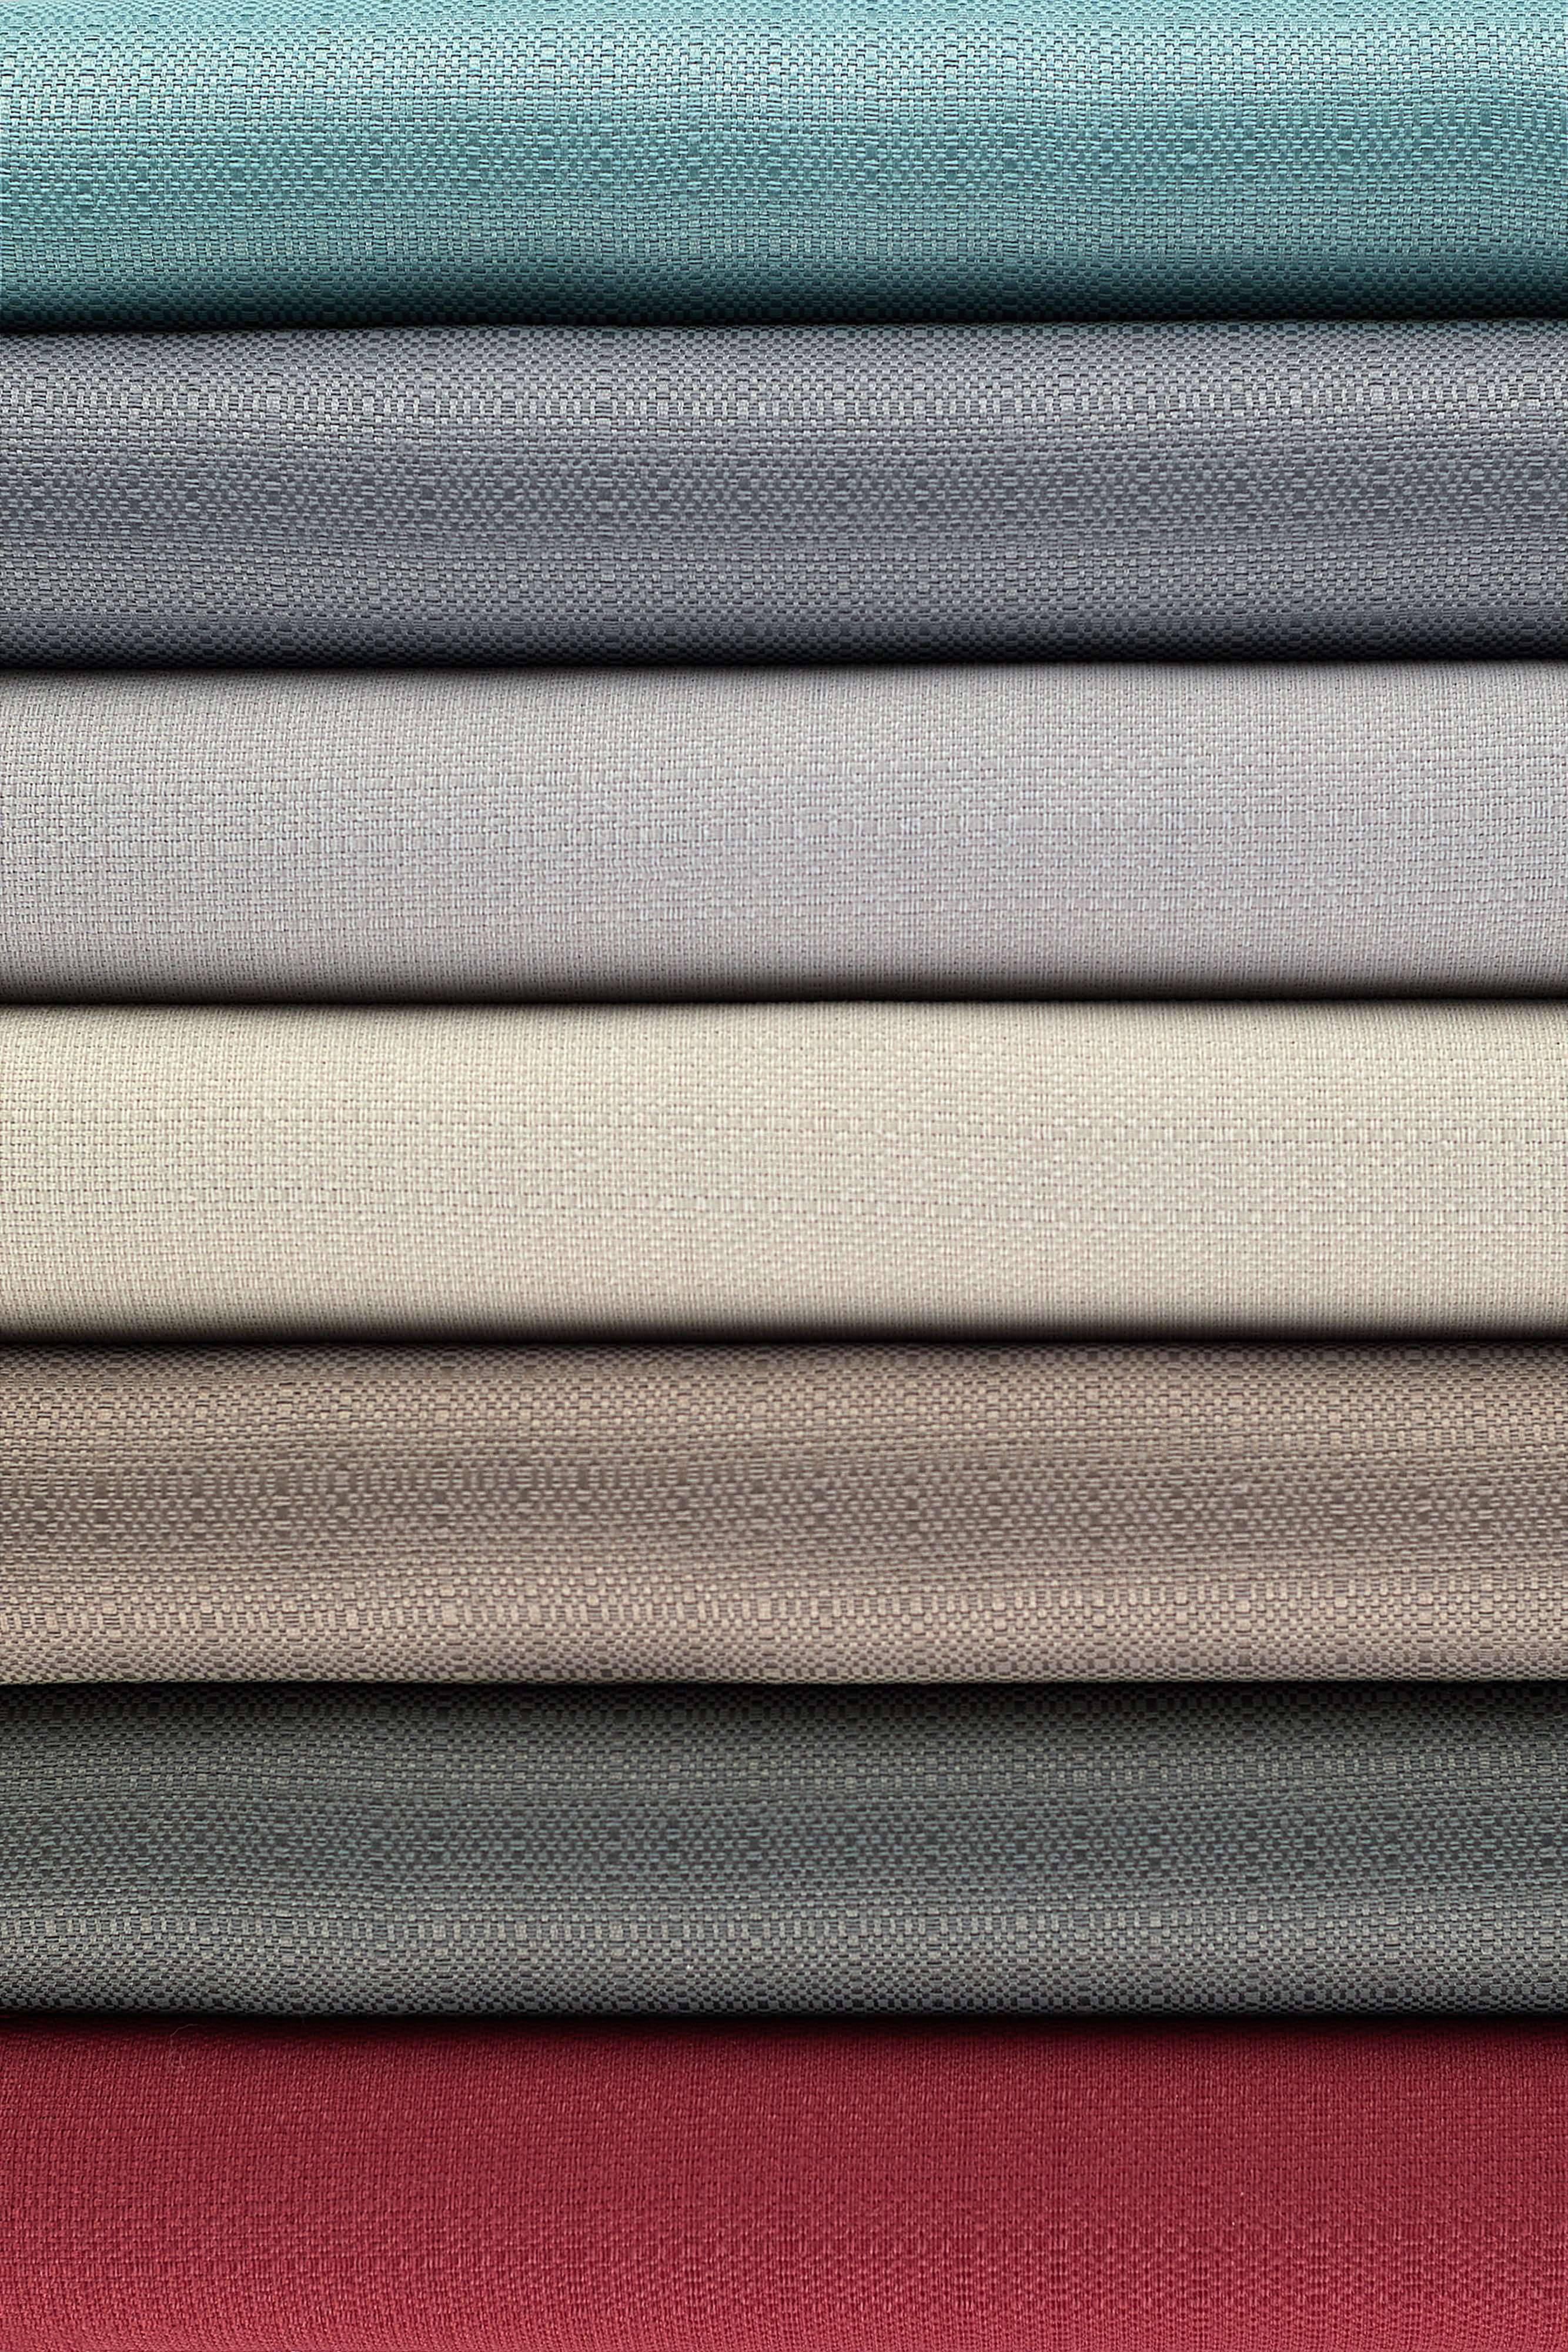 McAlister Textiles Nara Graphite FR Semi Plain Fabric Fabrics 